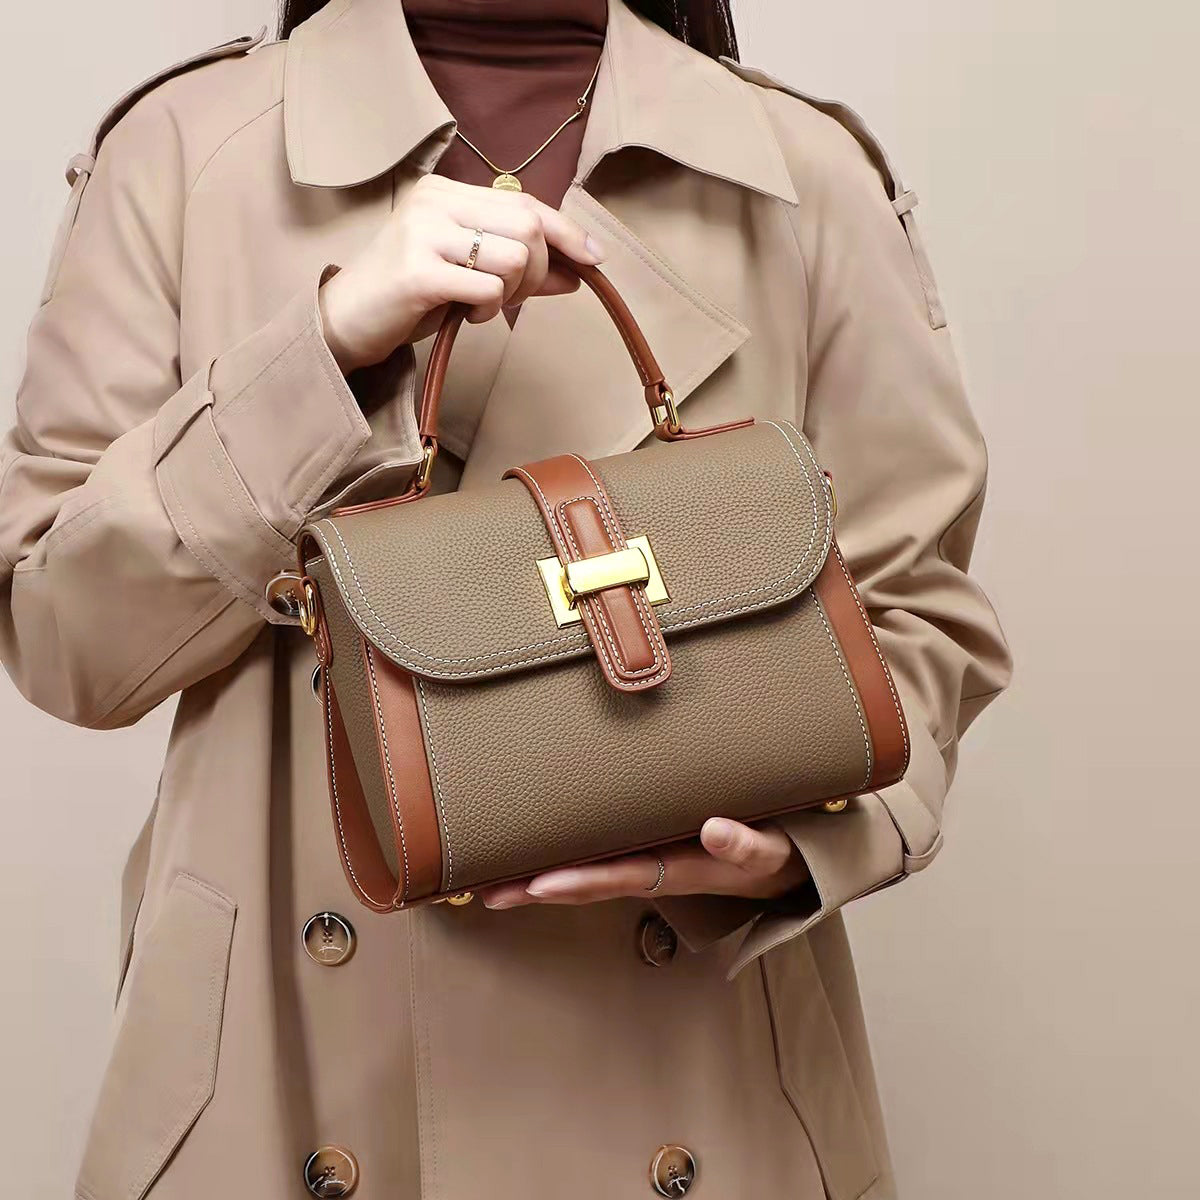 Olivia Klein Genuine Leather Chic Handbag